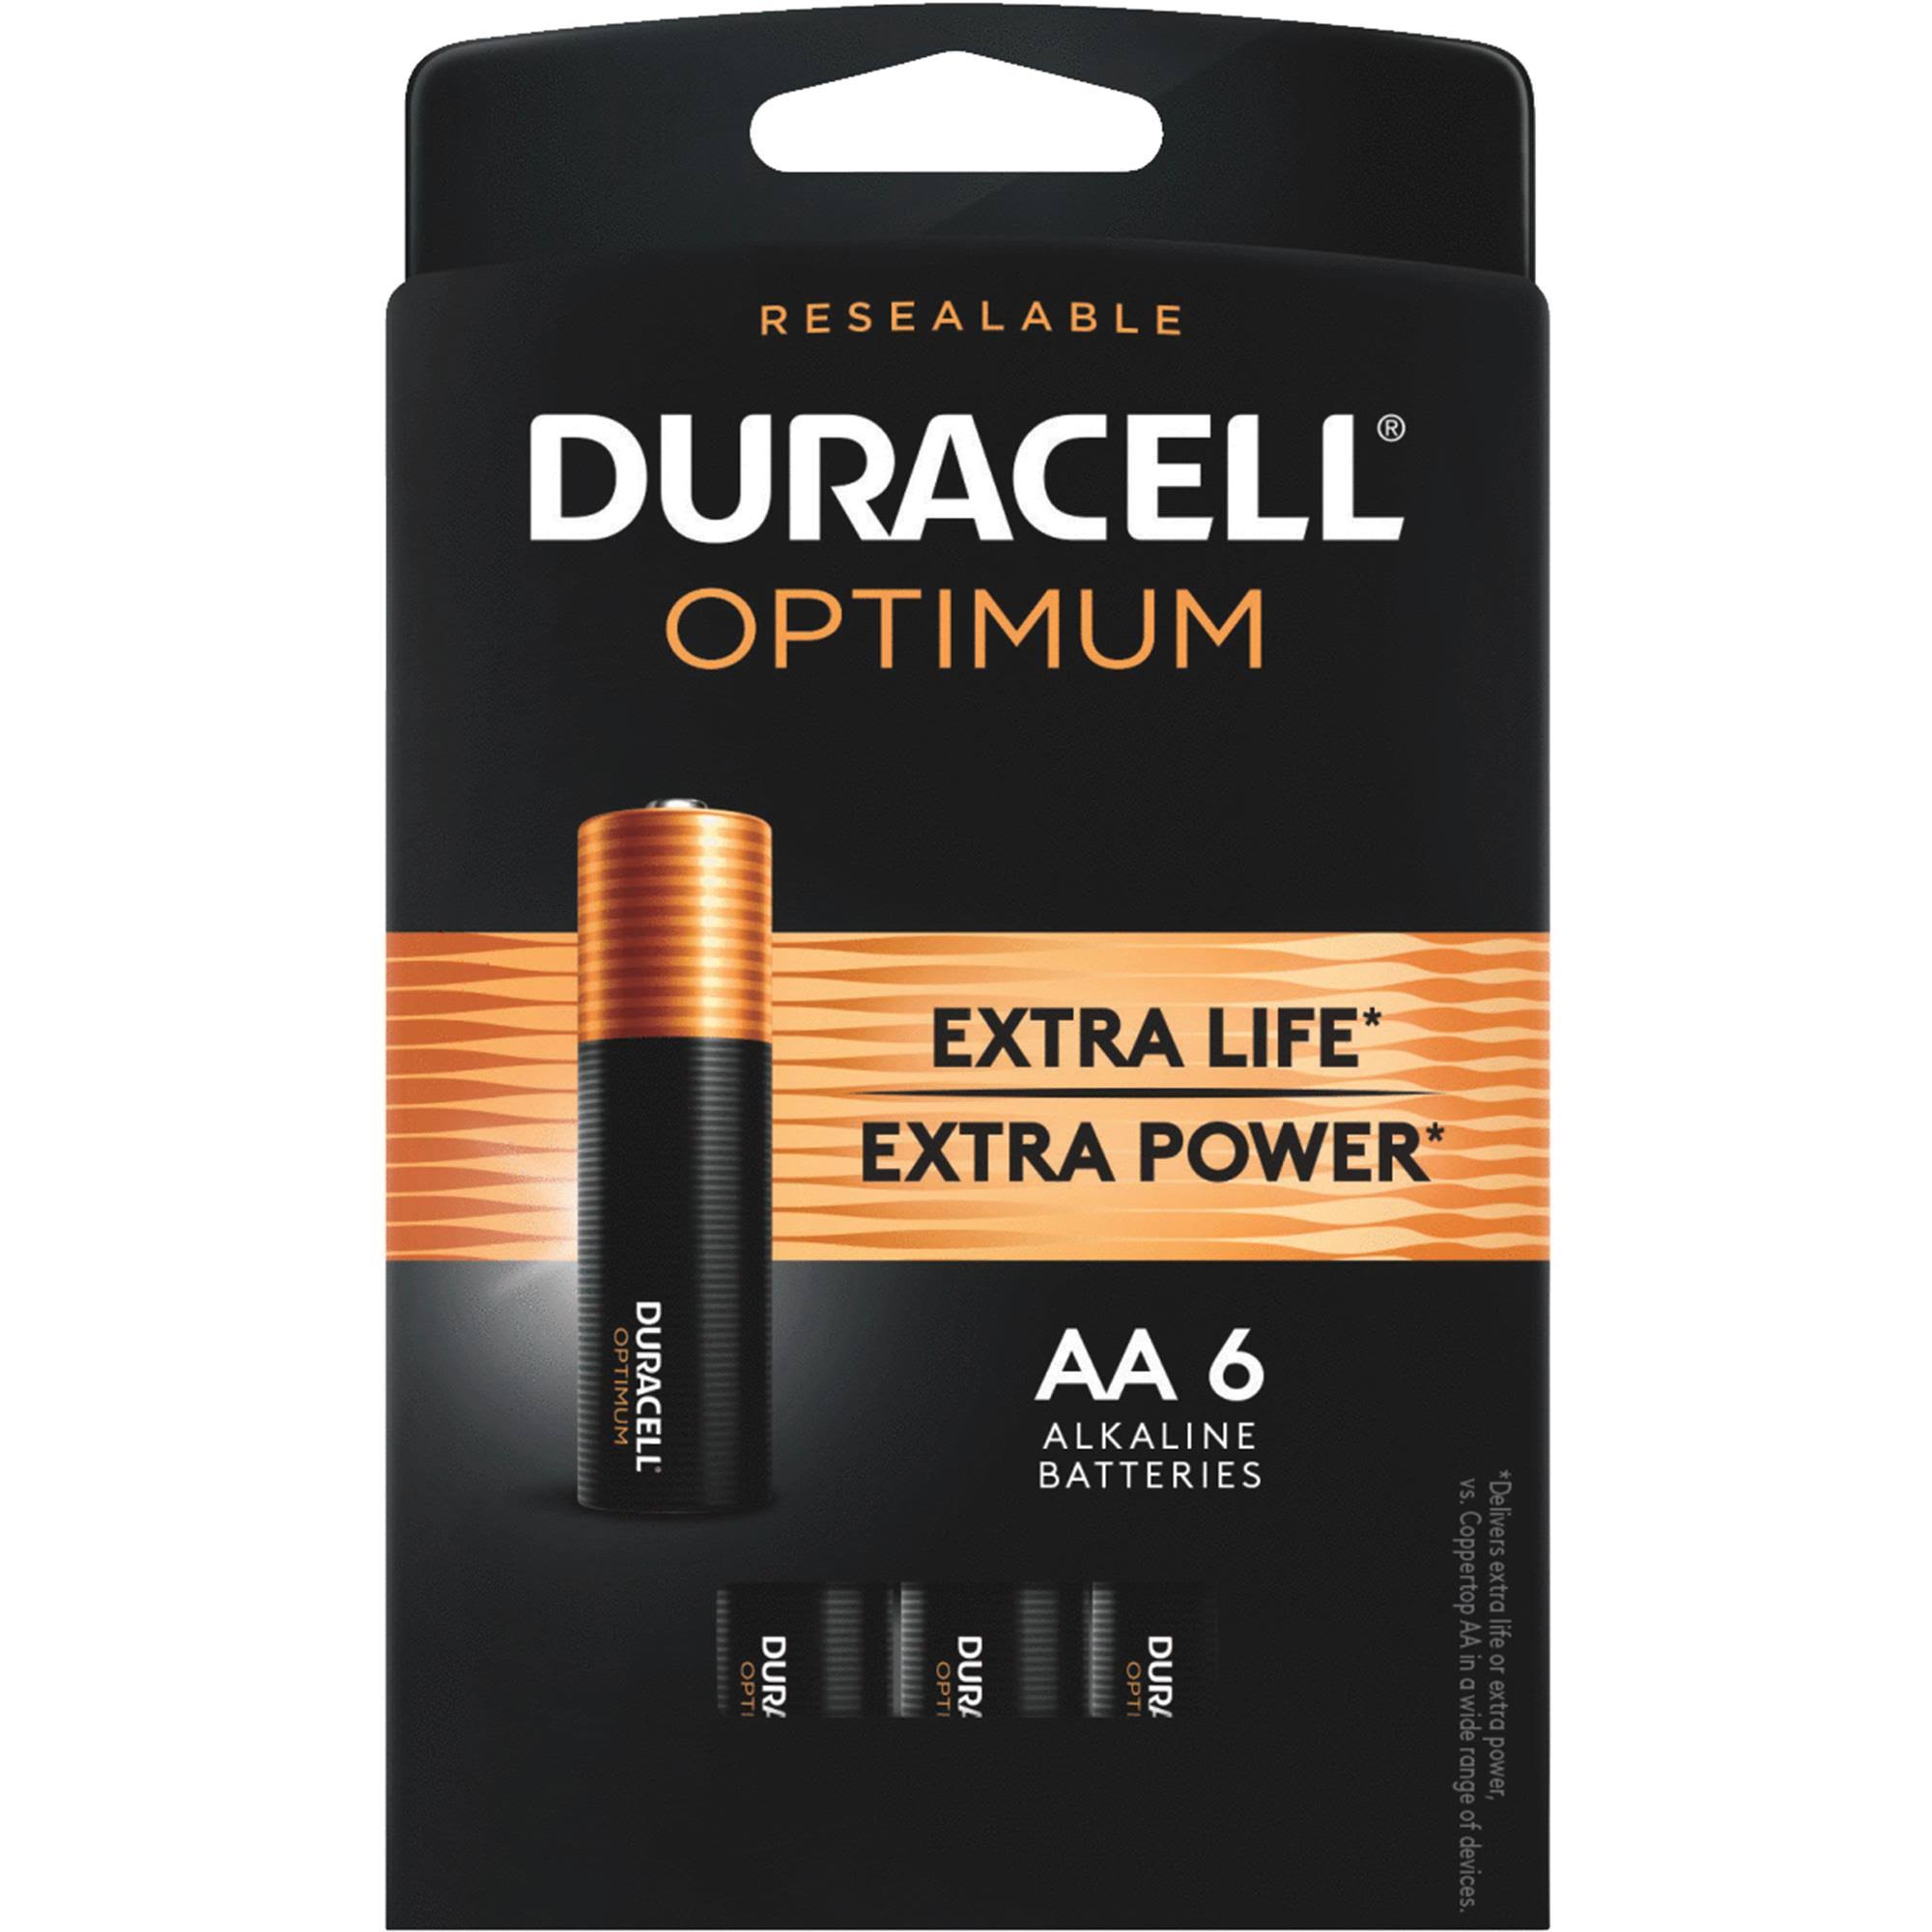 Duracell Optimum 1.5V Alkaline AA Batteries - 6 pack